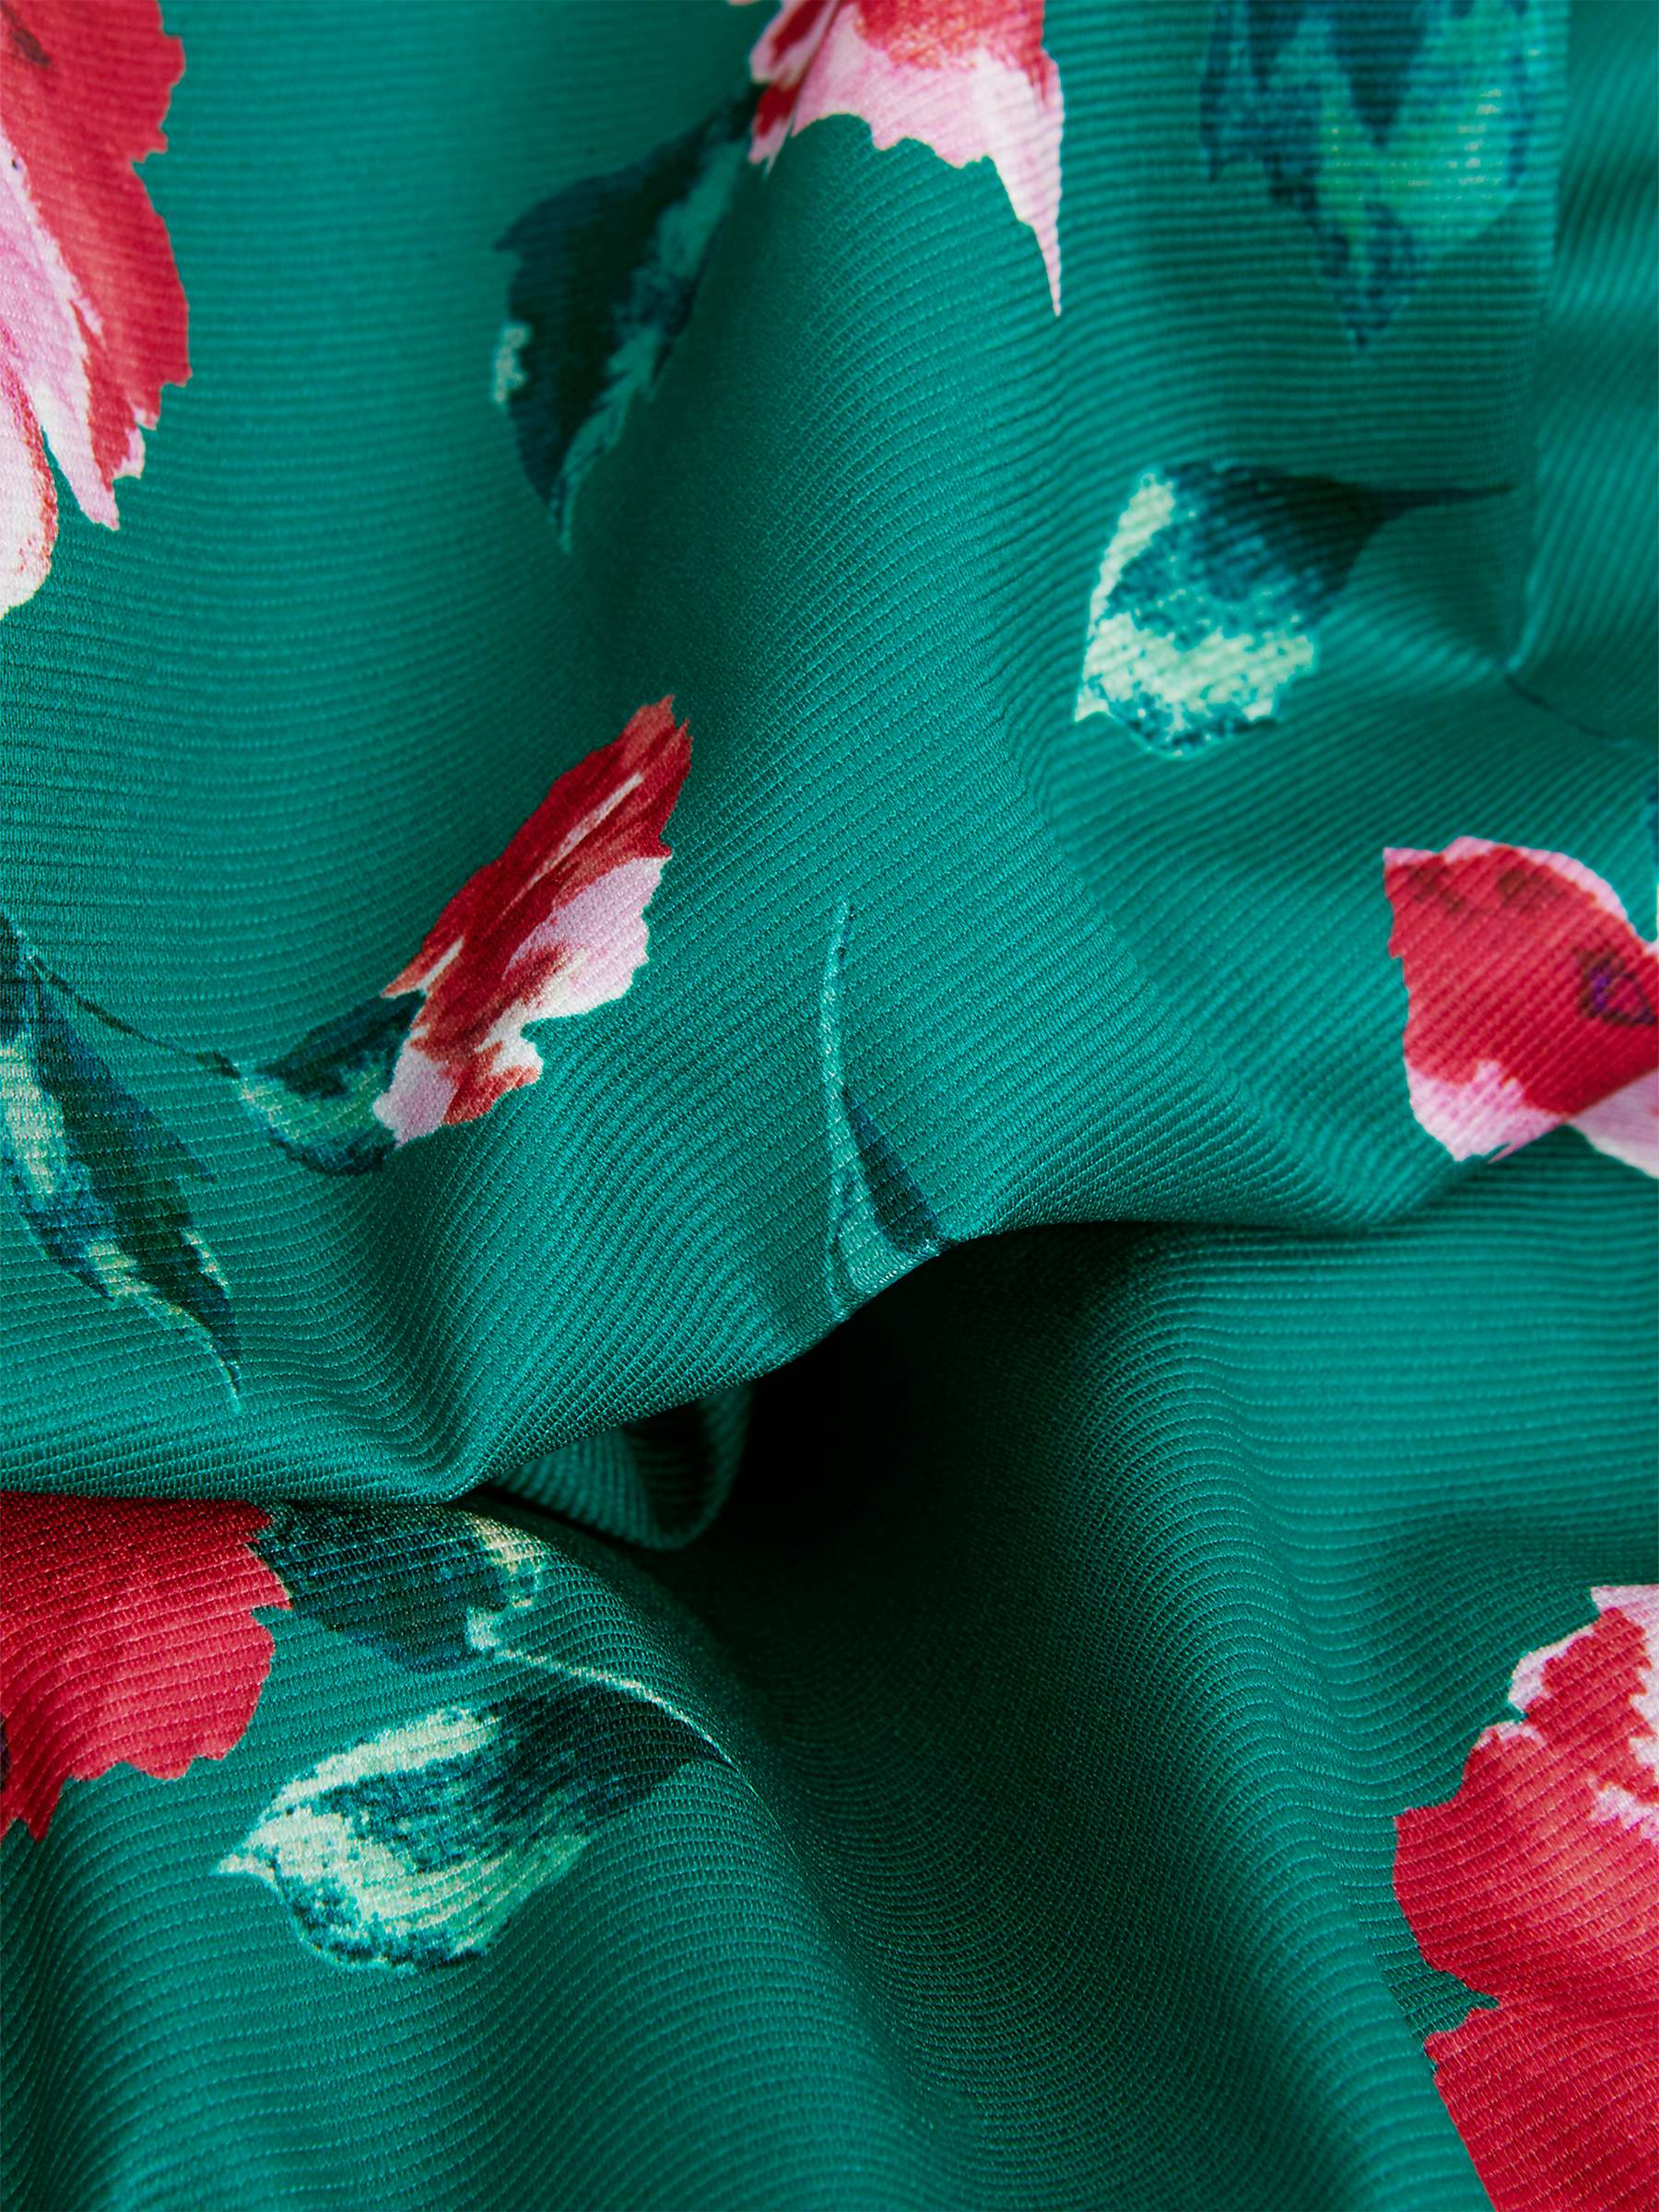 Buy Hobbs Moira Floral Print Pencil Dress, Green/Multi Online at johnlewis.com